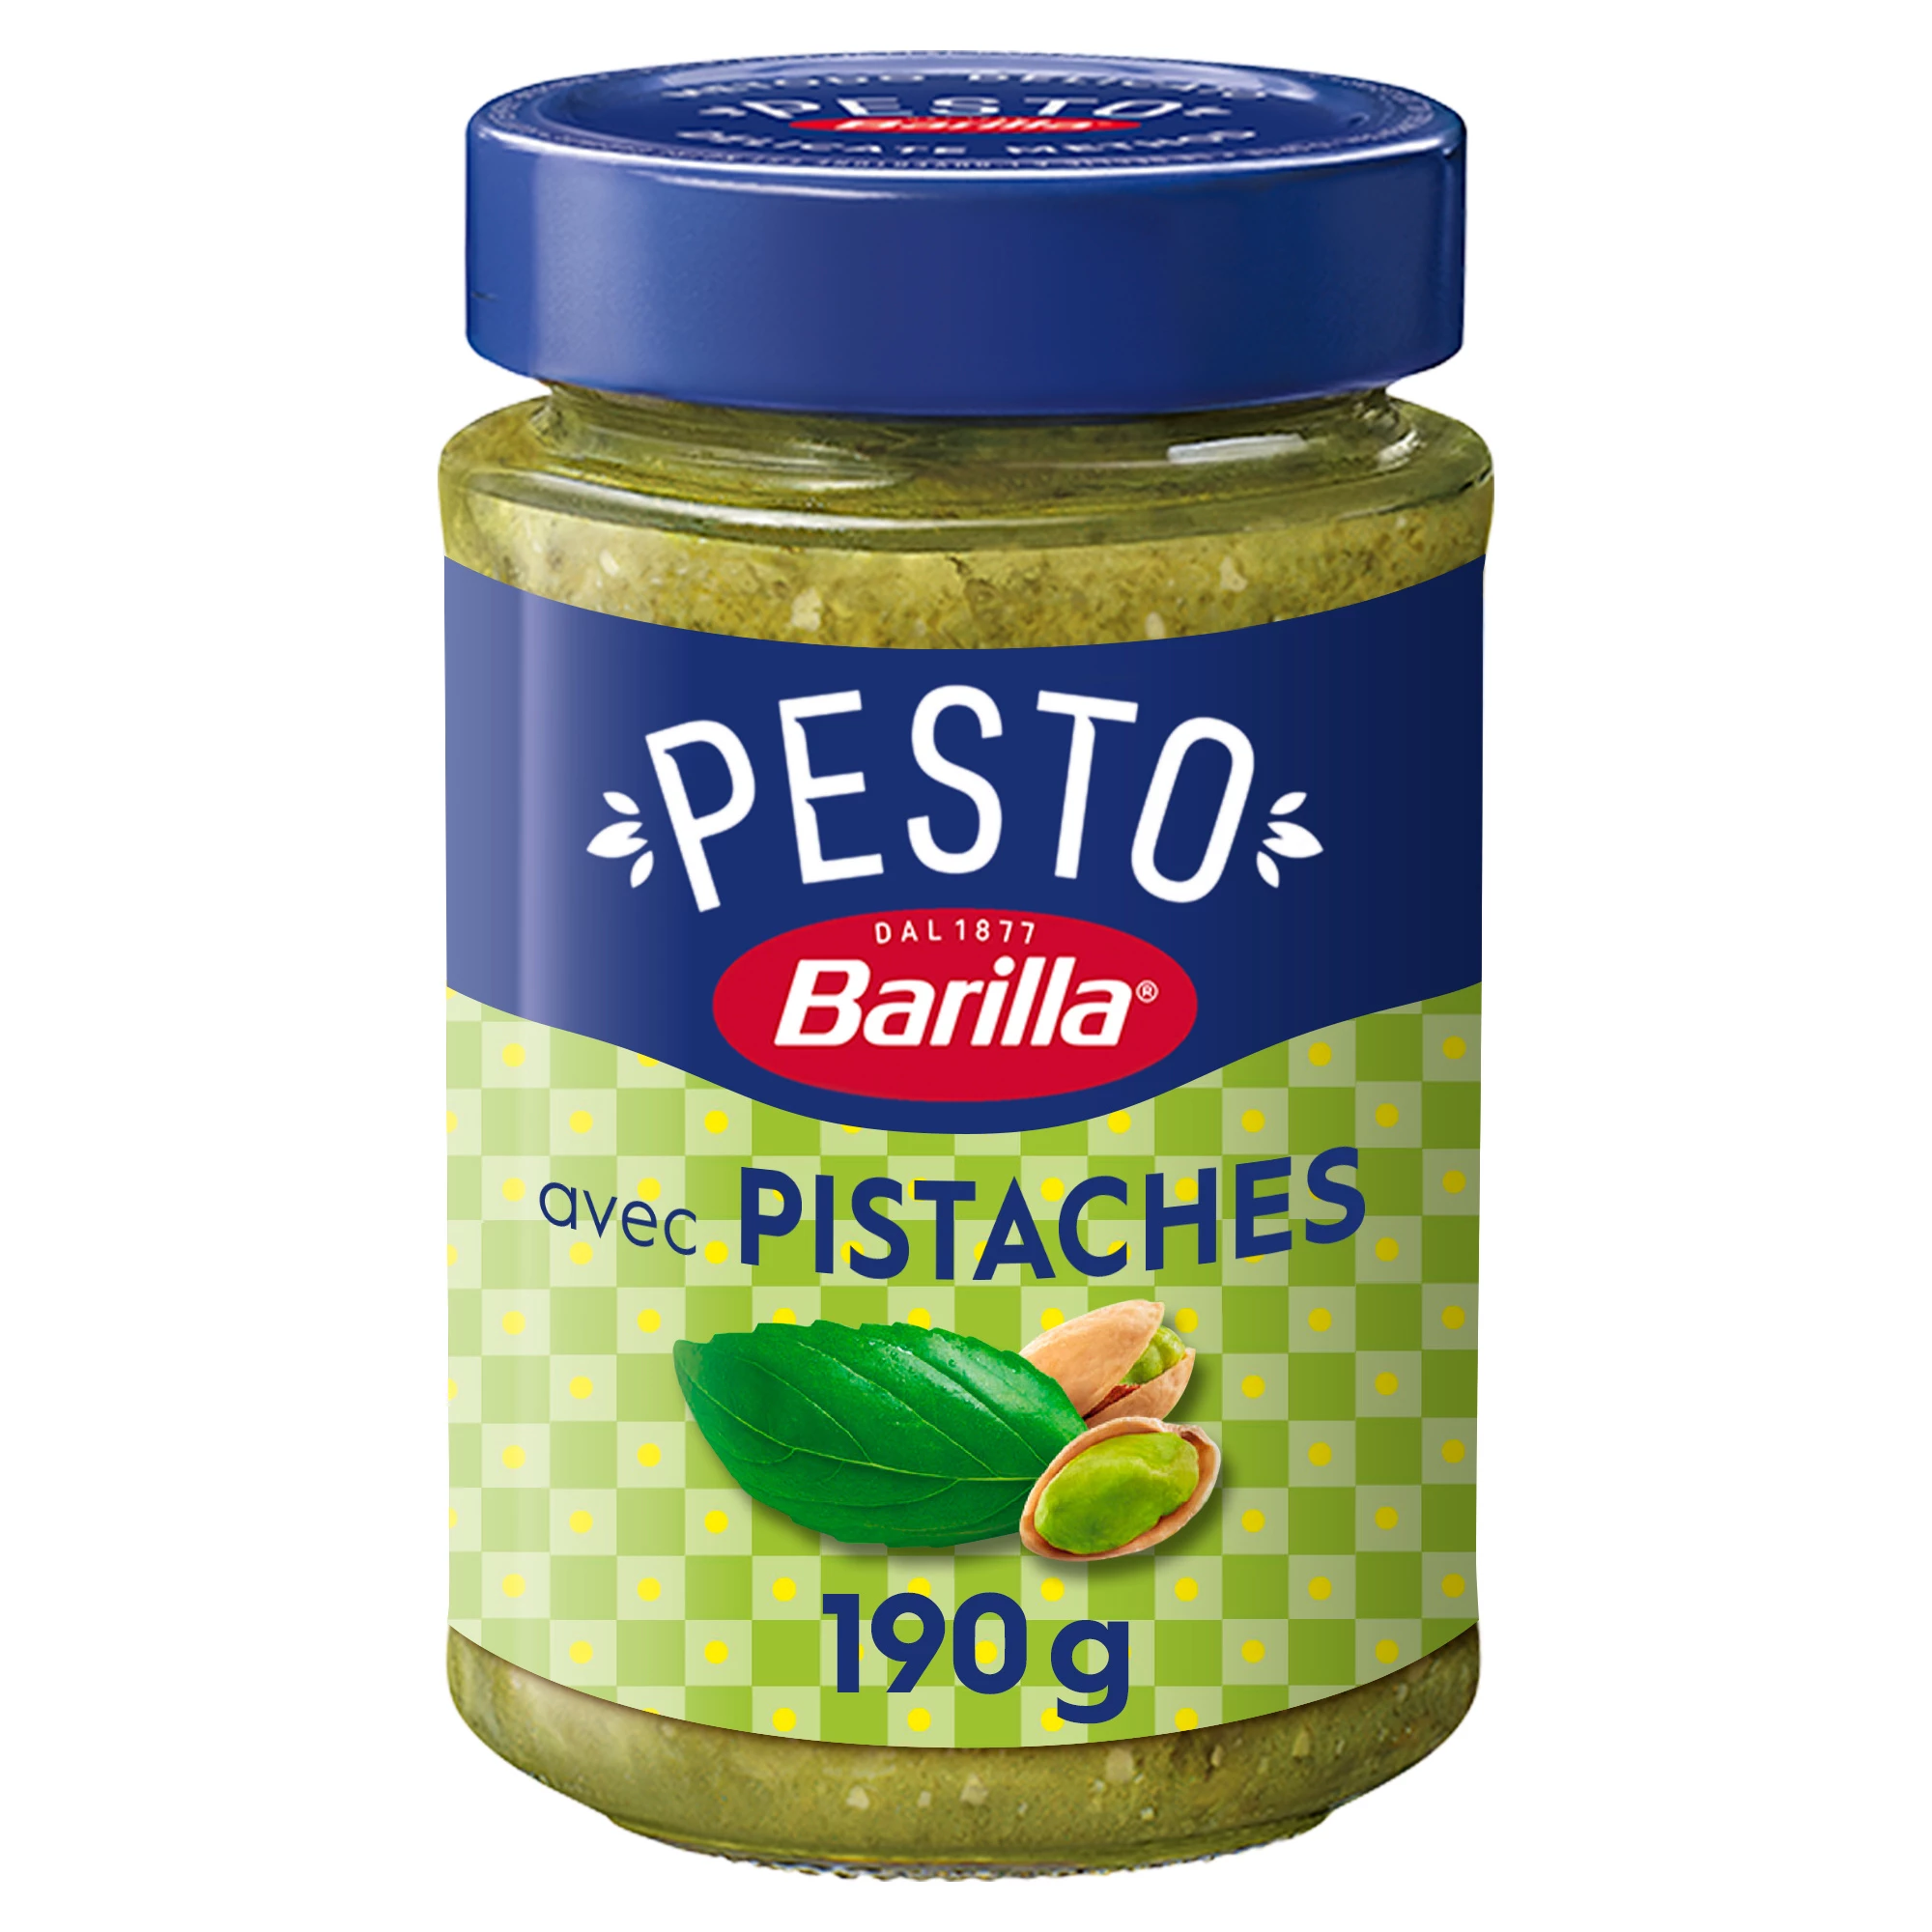 Pistachio and Basil Pesto Sauce, 190g -  BARILLA